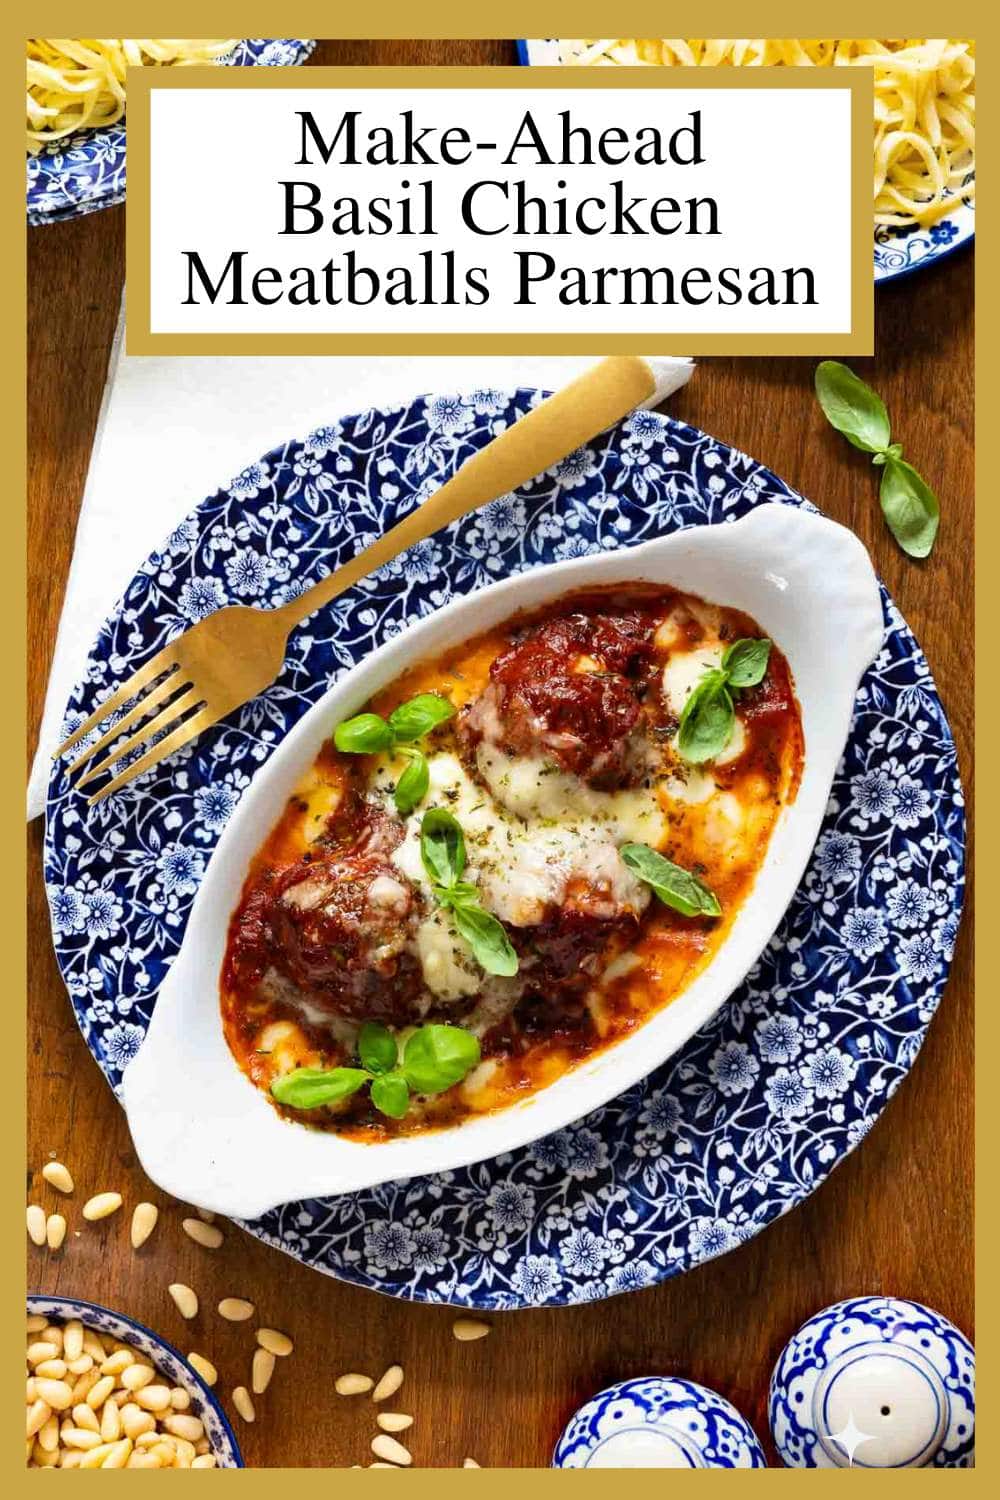 Make-Ahead Basil Chicken Meatballs Parmesan